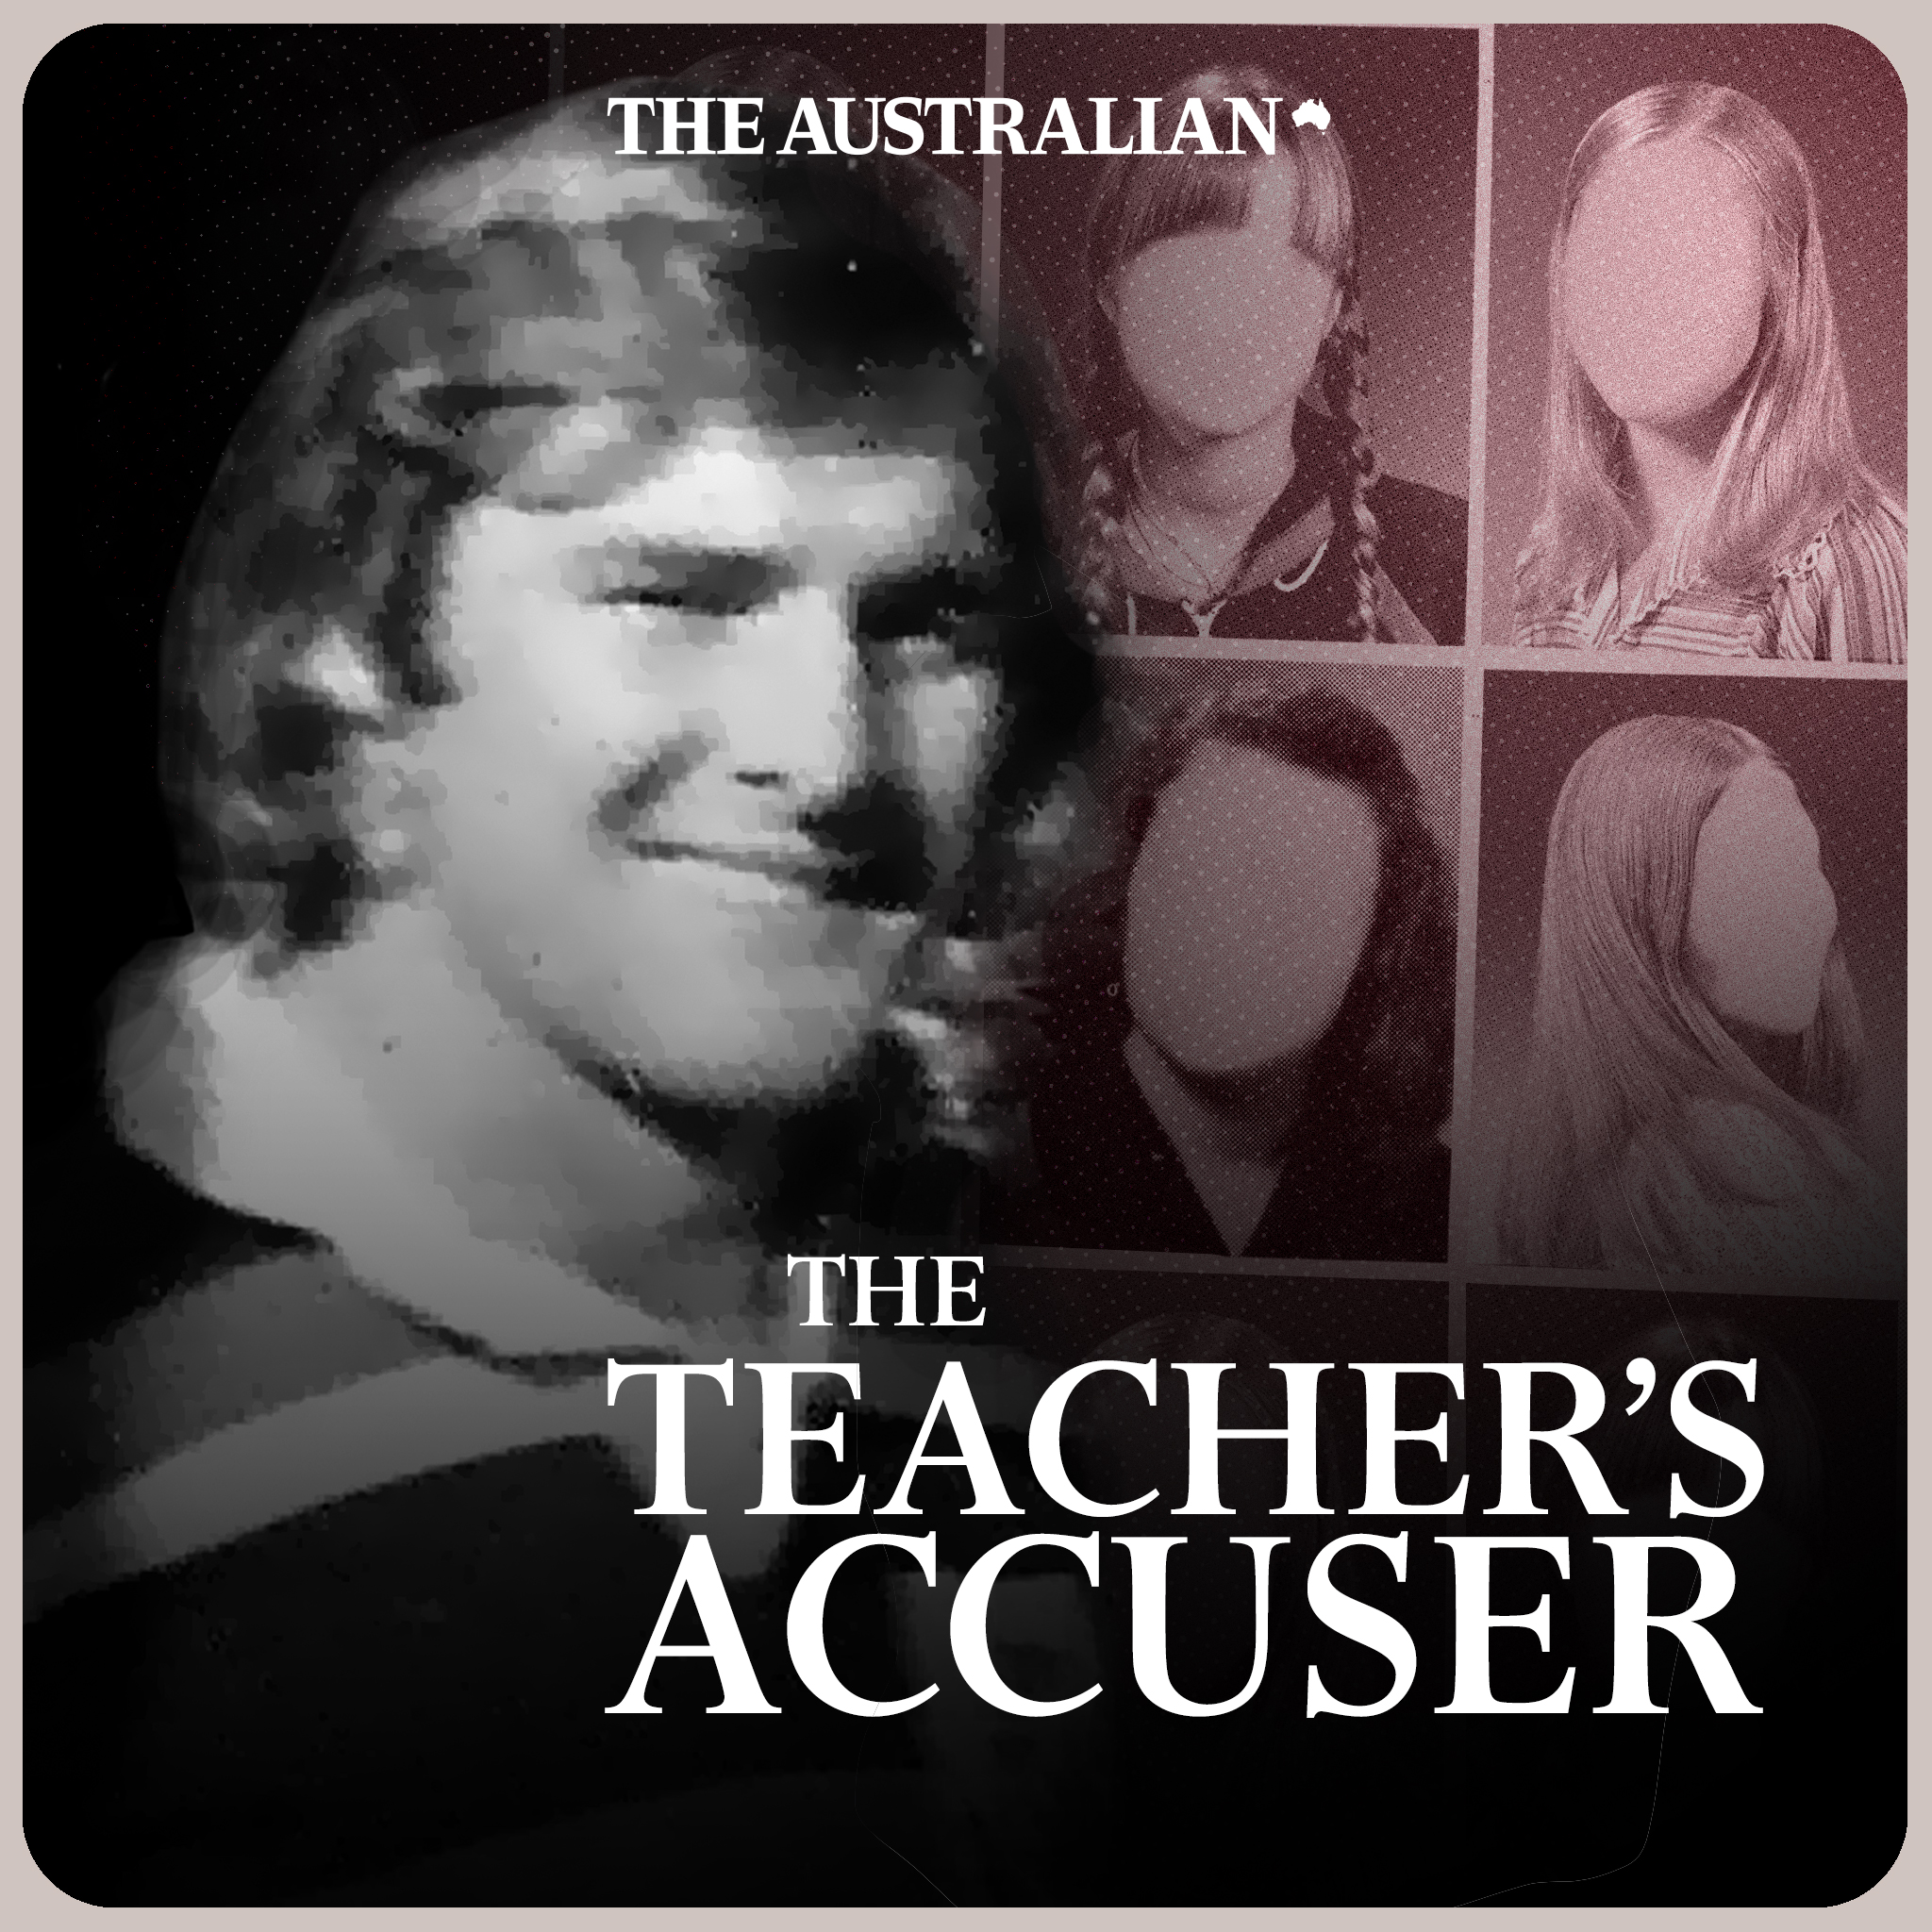 Introducing The Teacher's Accuser